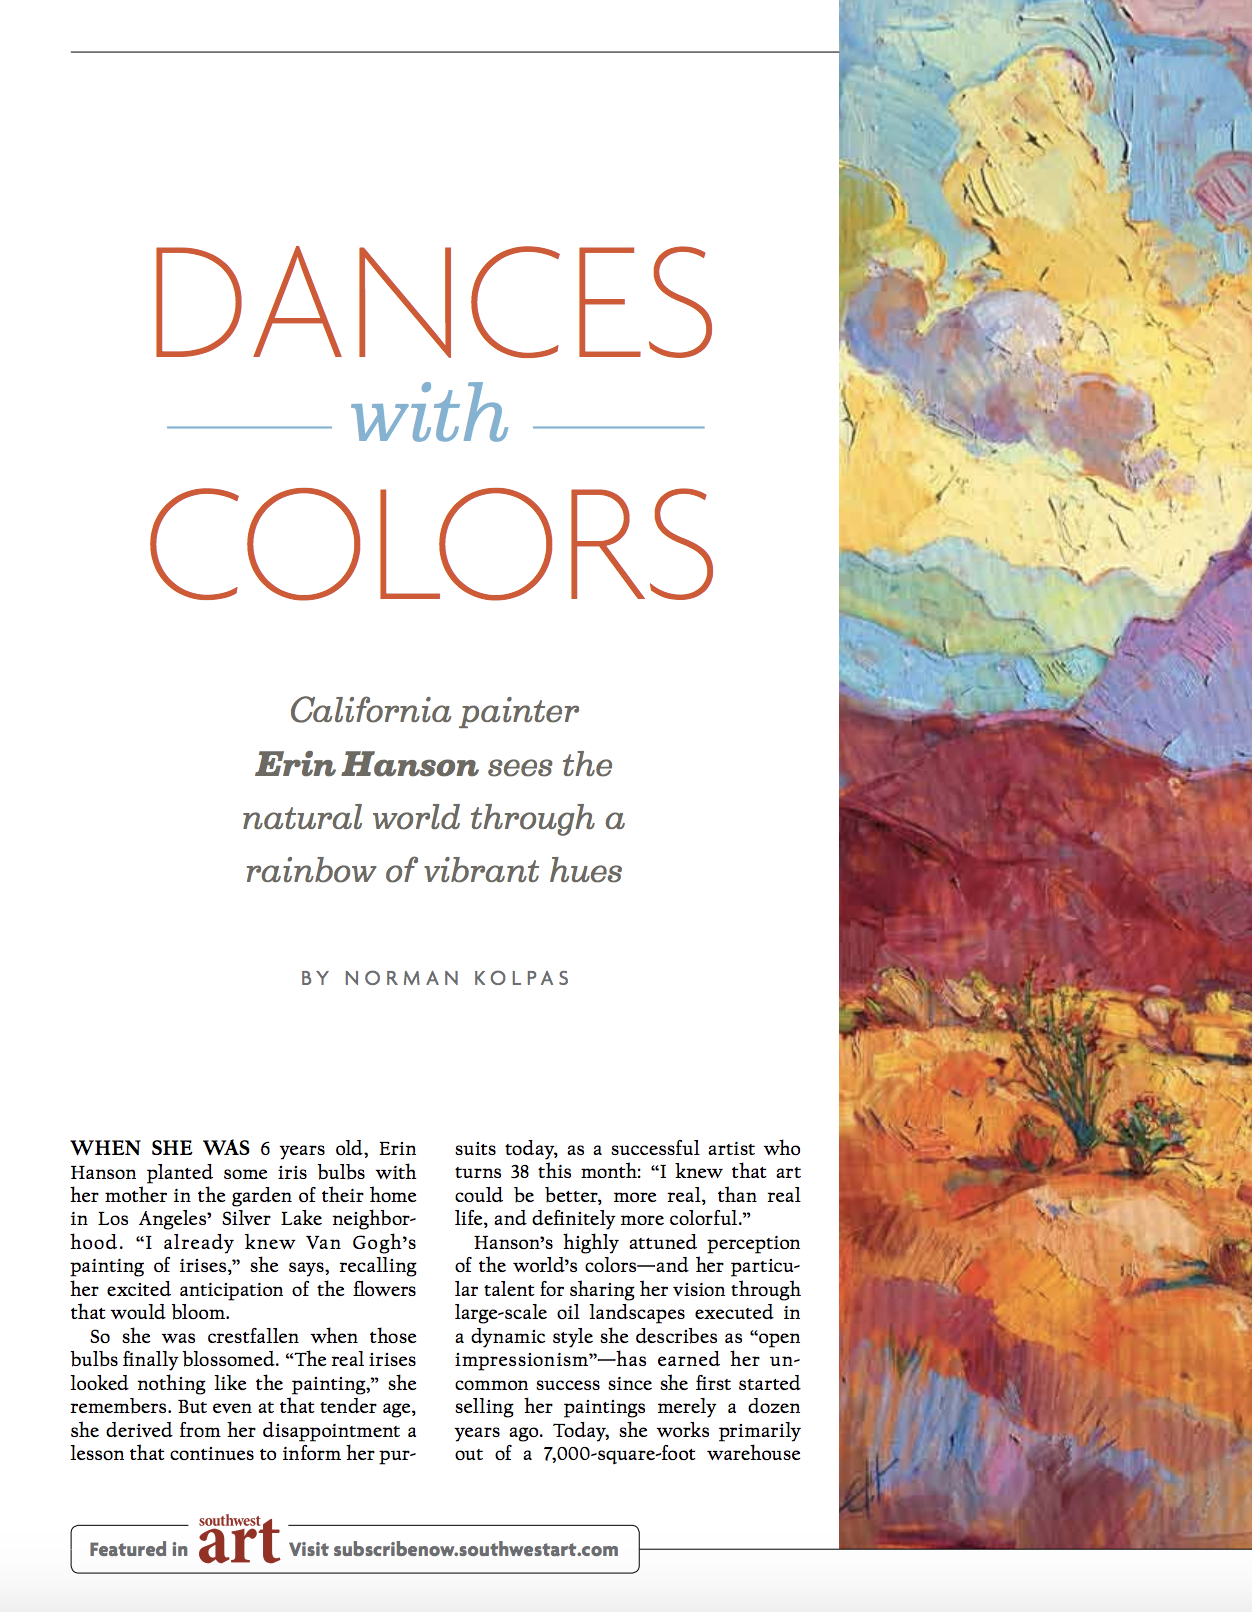 Dances with Colors